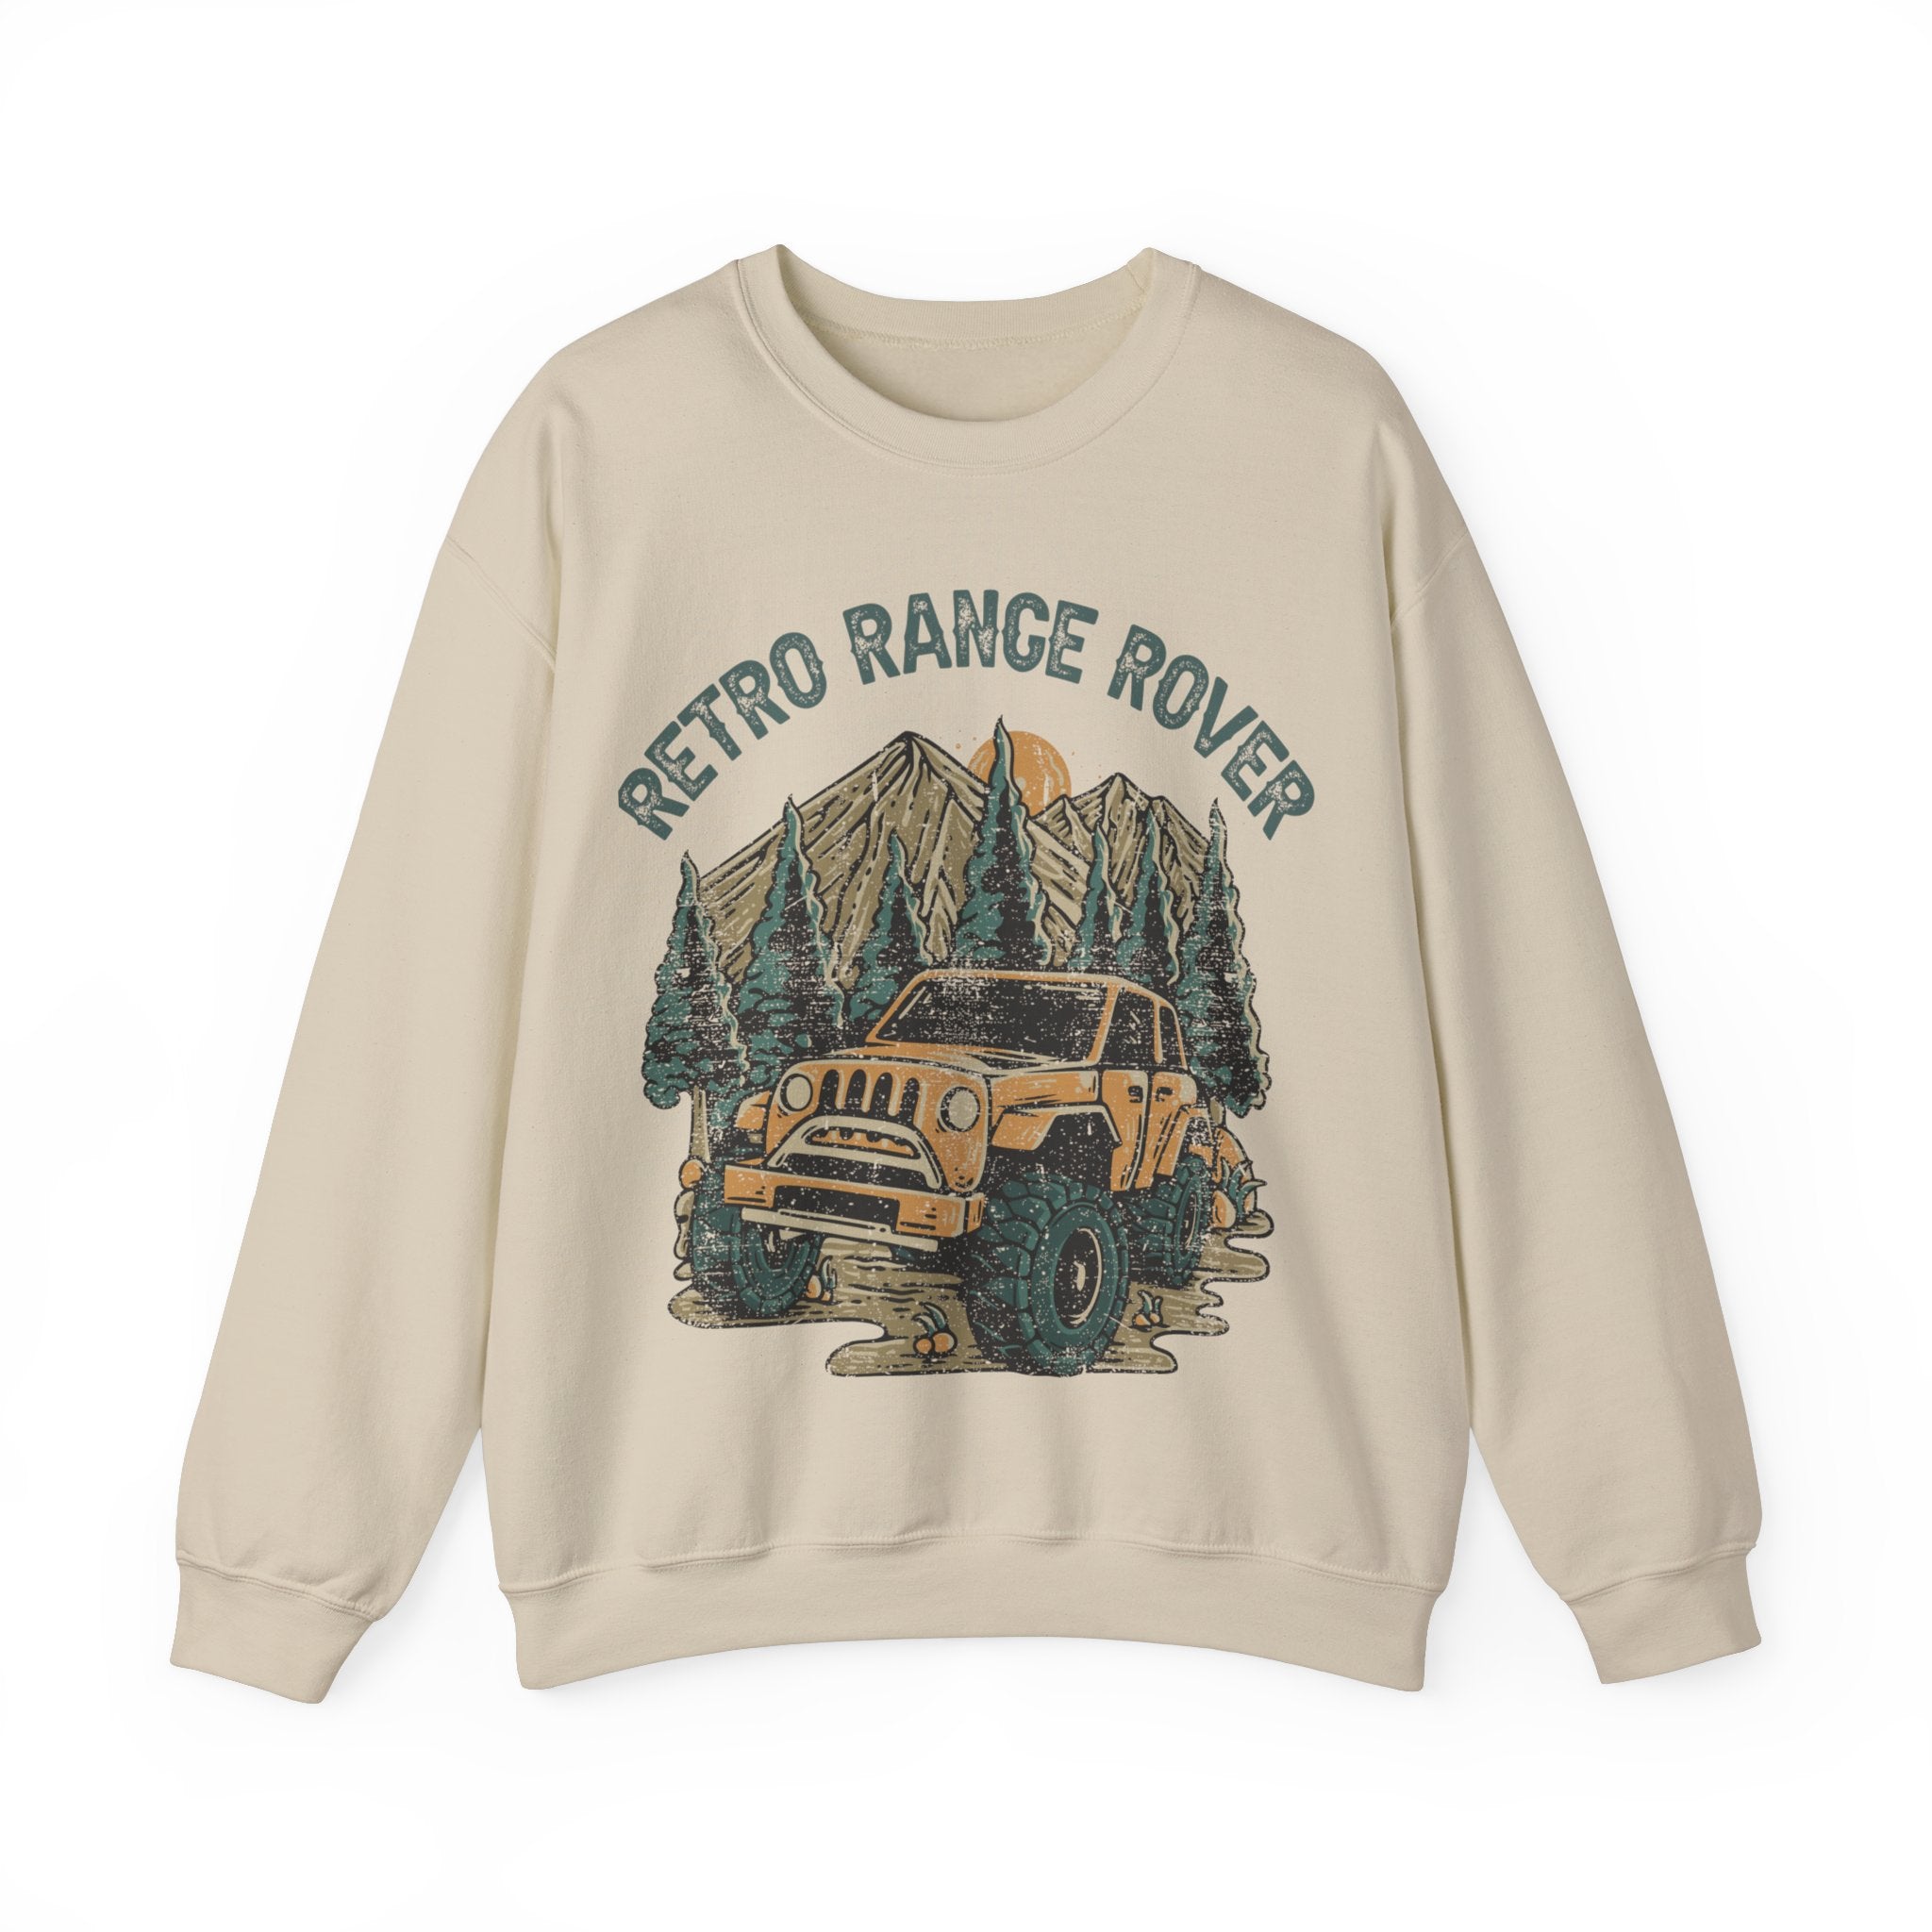 Women's "Retro Range Rover" Vintage Sweatshirt